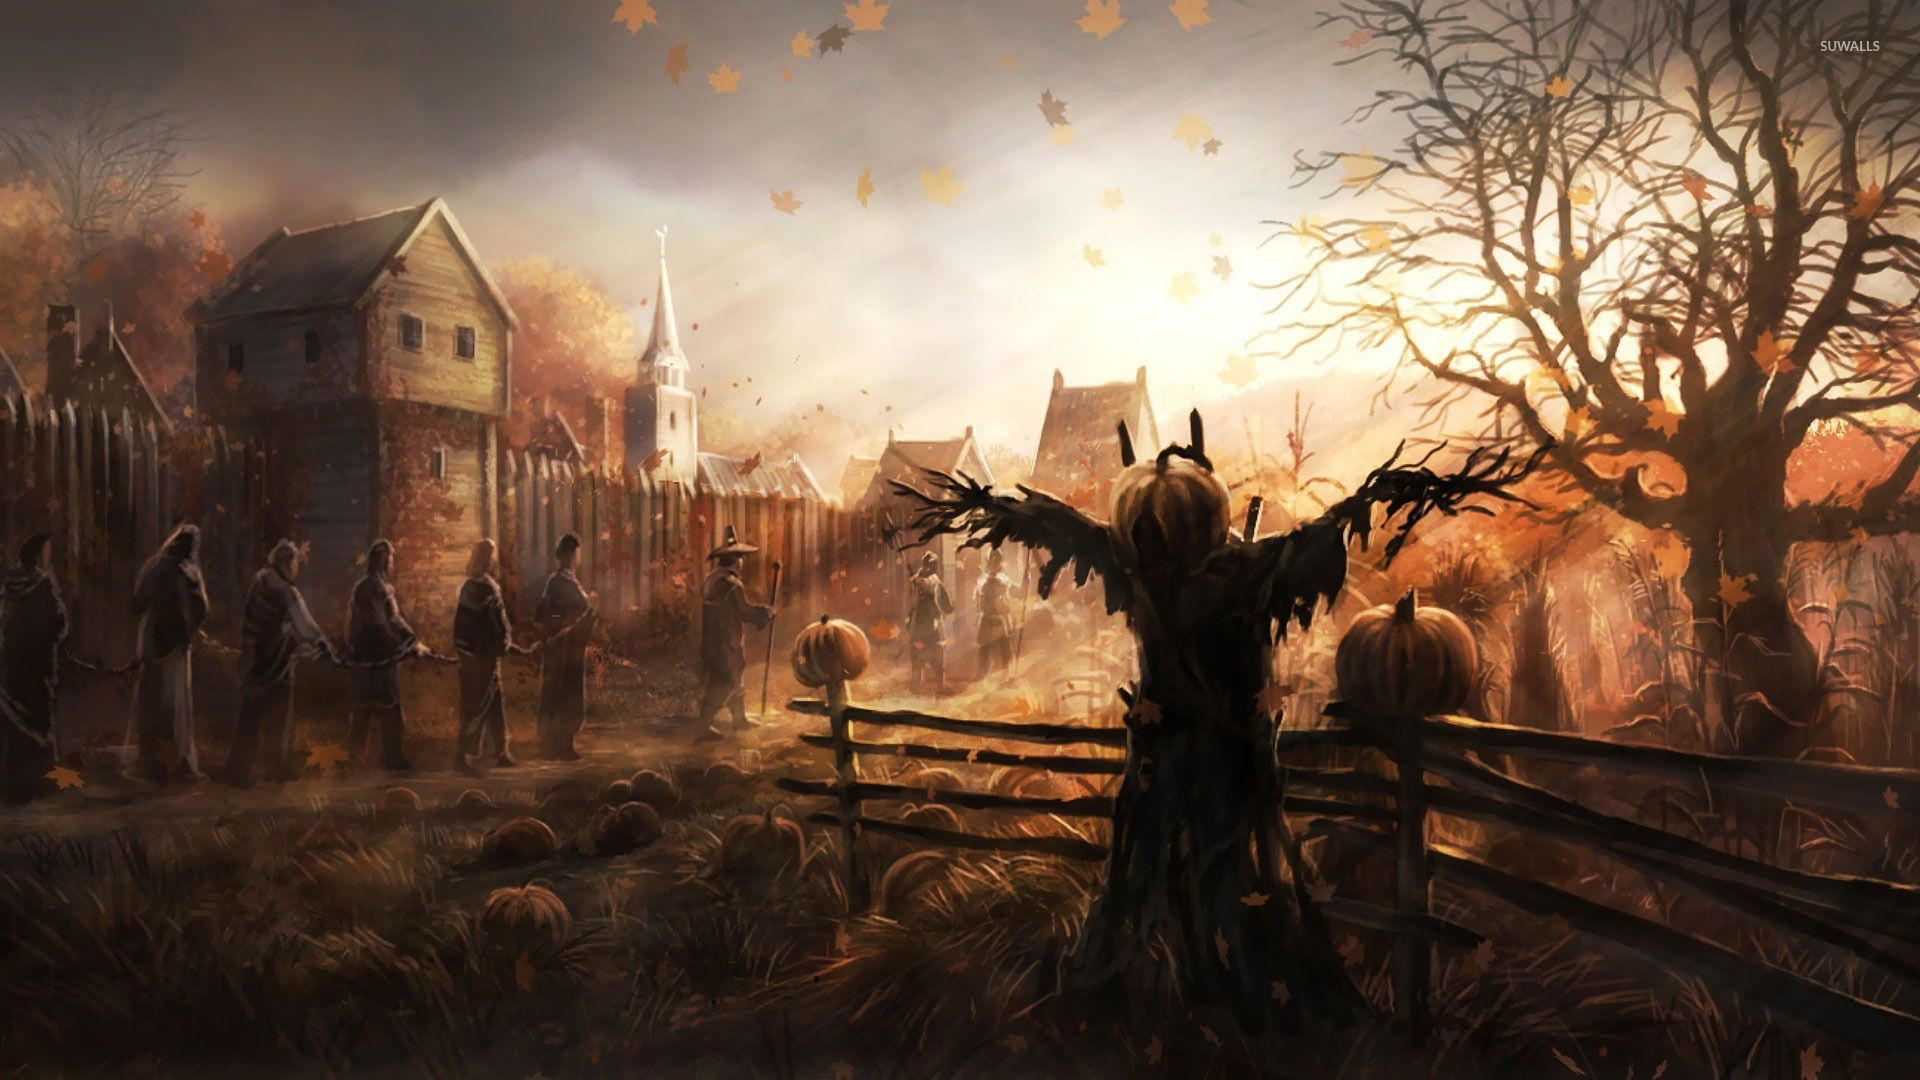 1920x1080 Pin by Sean on Nightmares; Within Us All | Halloween artwork, Dark fantasy art, Scarecrow